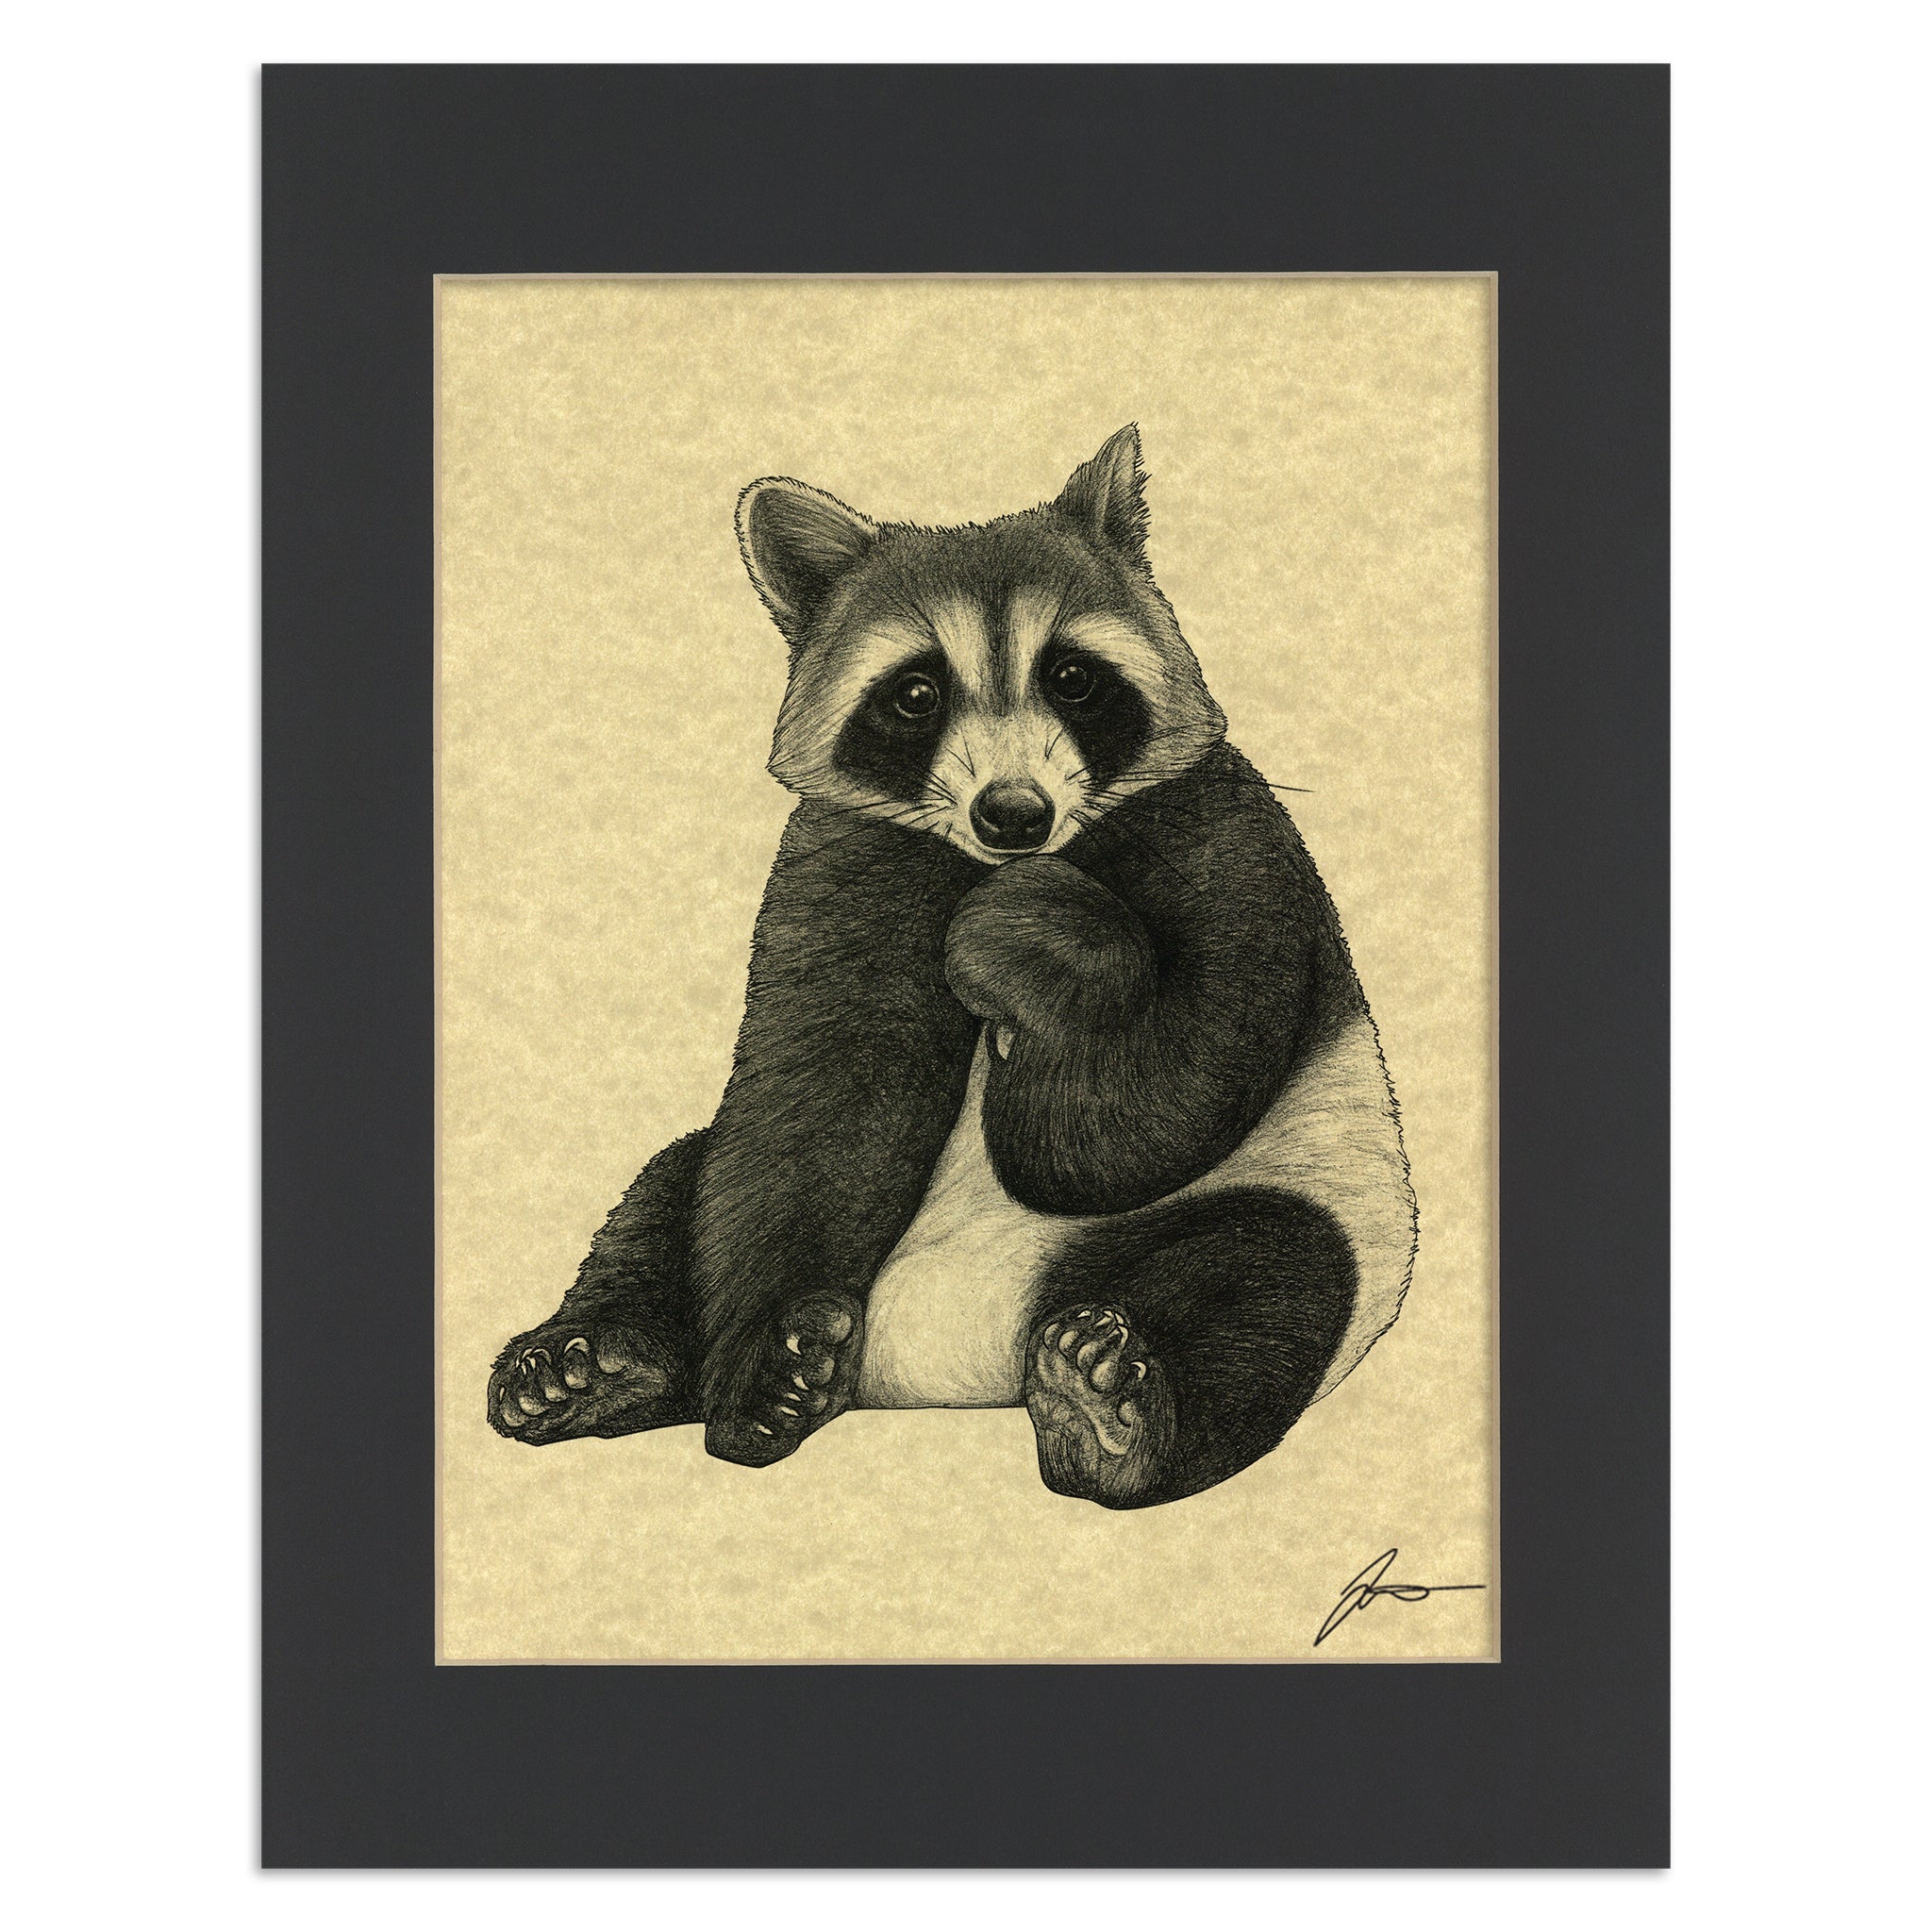 Pandacoon | Panda + Raccoon Hybrid Animal | 11x14" Parchment Print